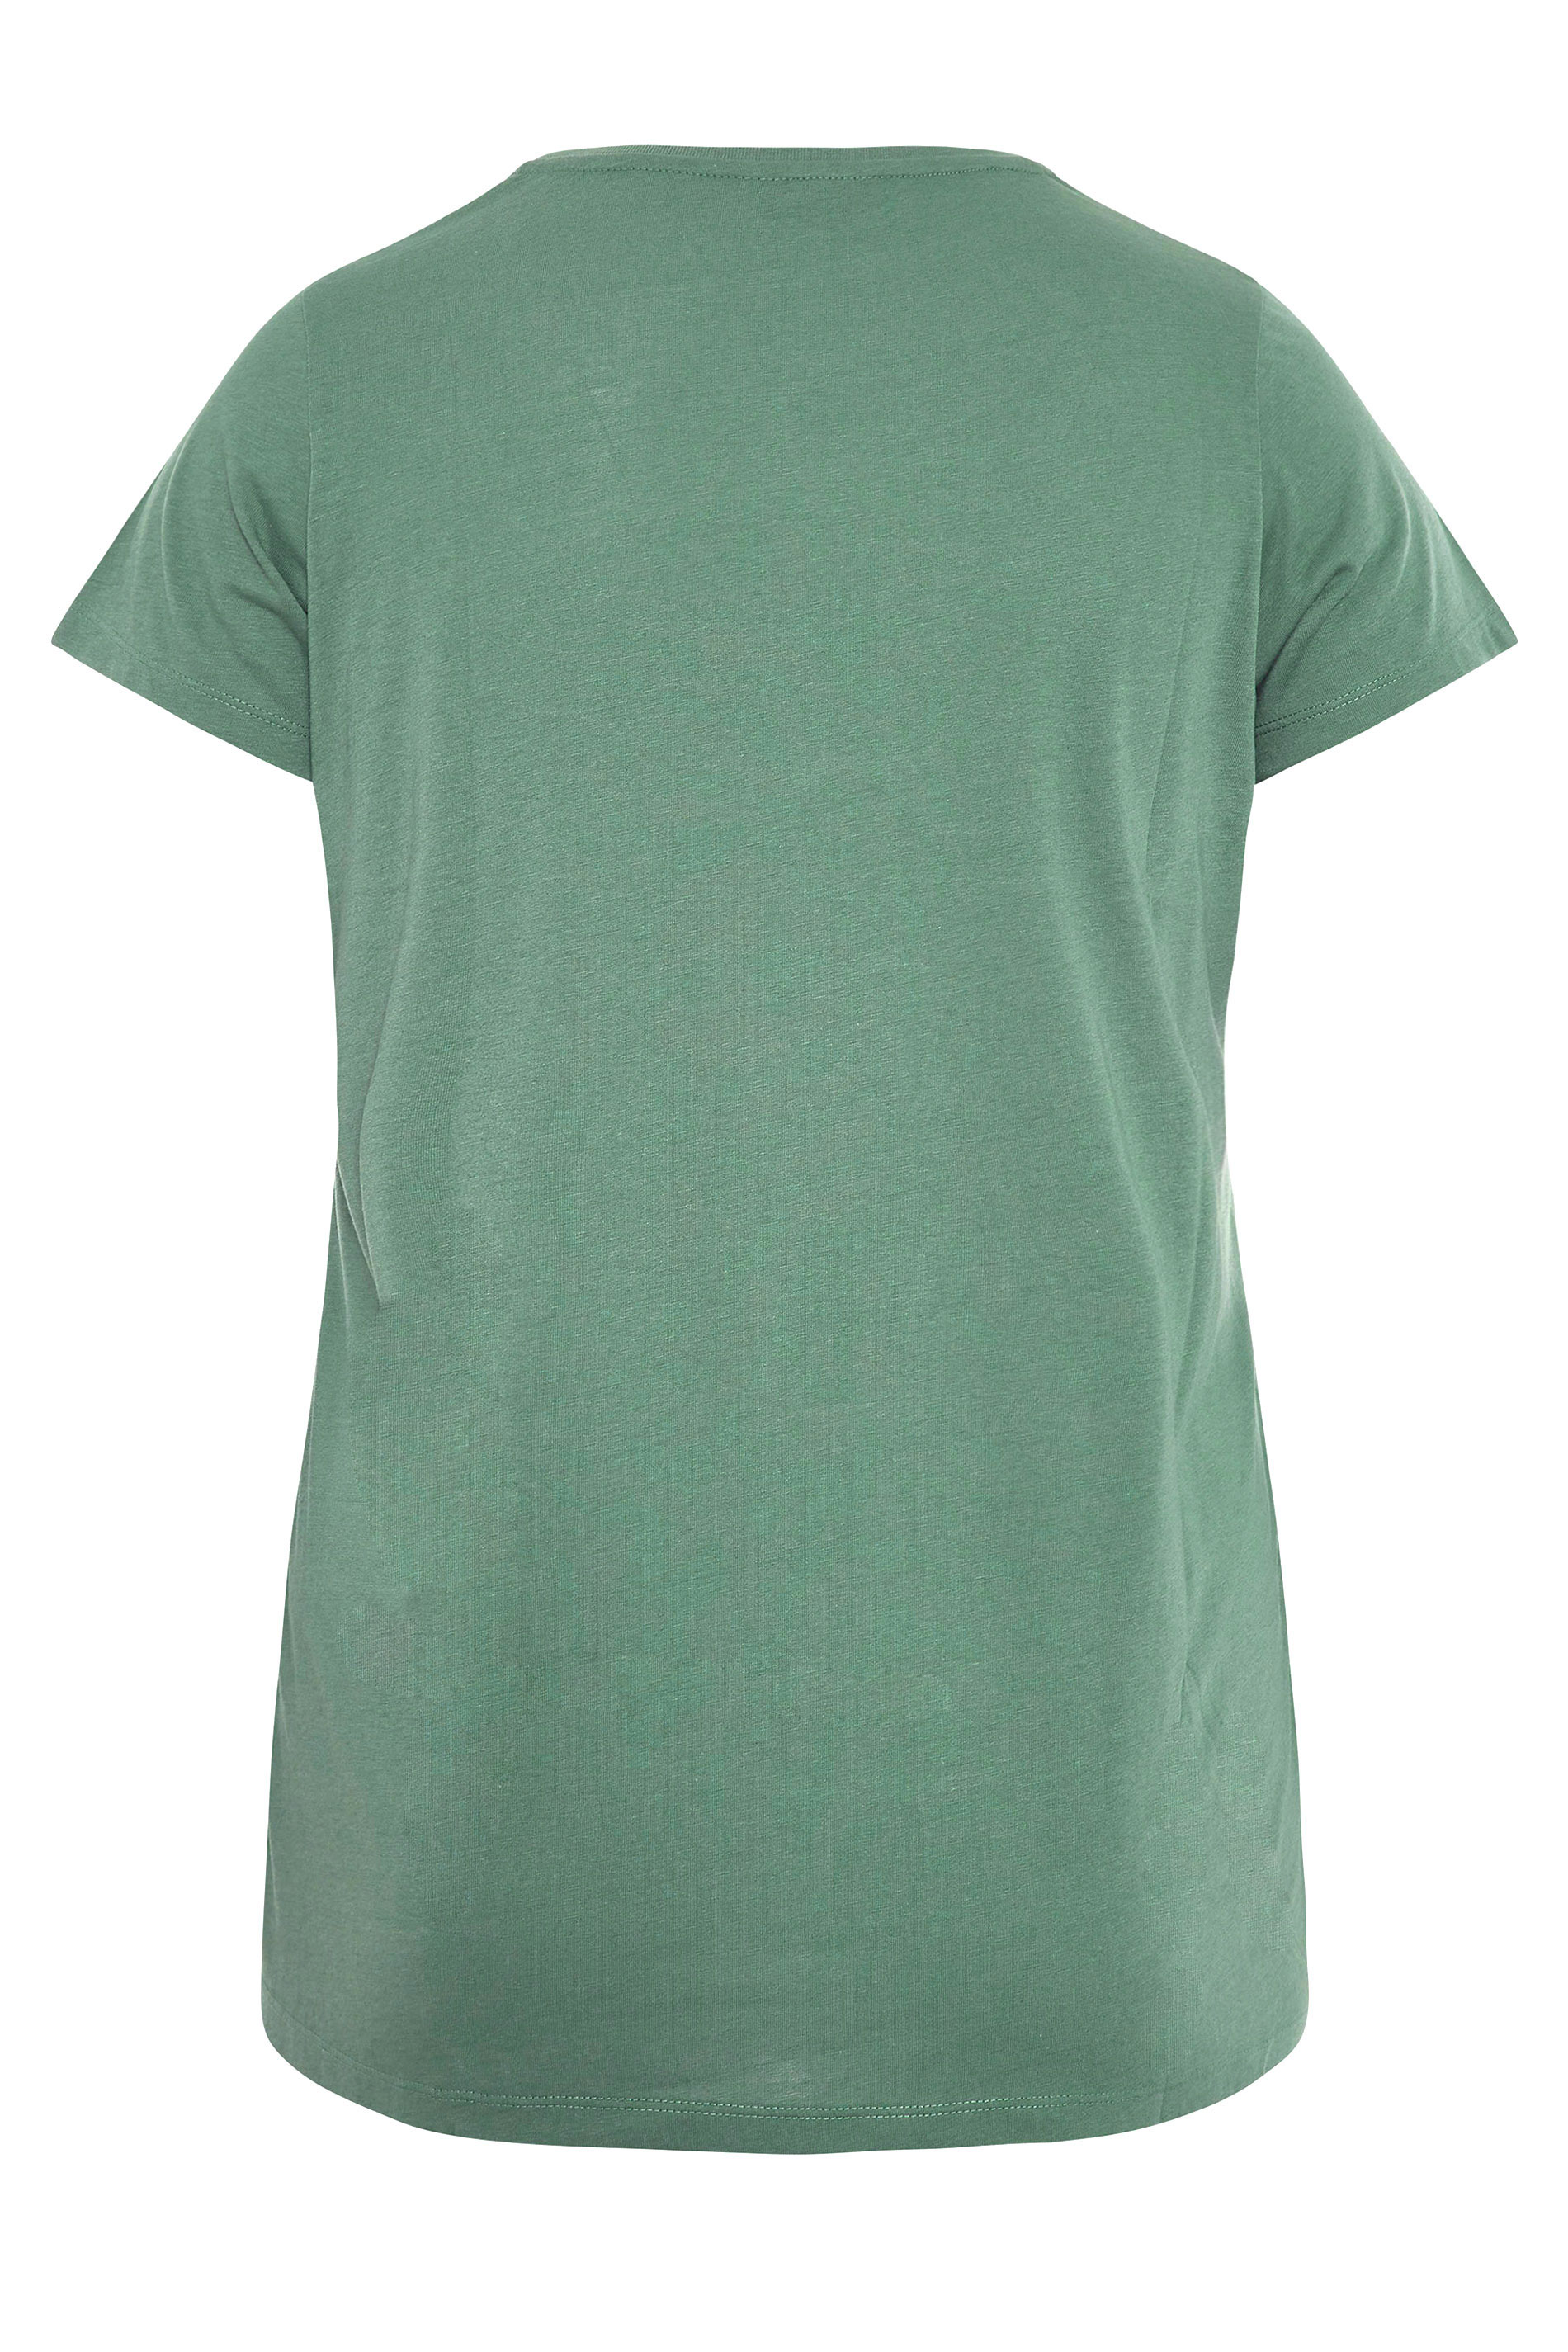 Plus Size Sage Green Marl Basic T-Shirt | Yours Clothing